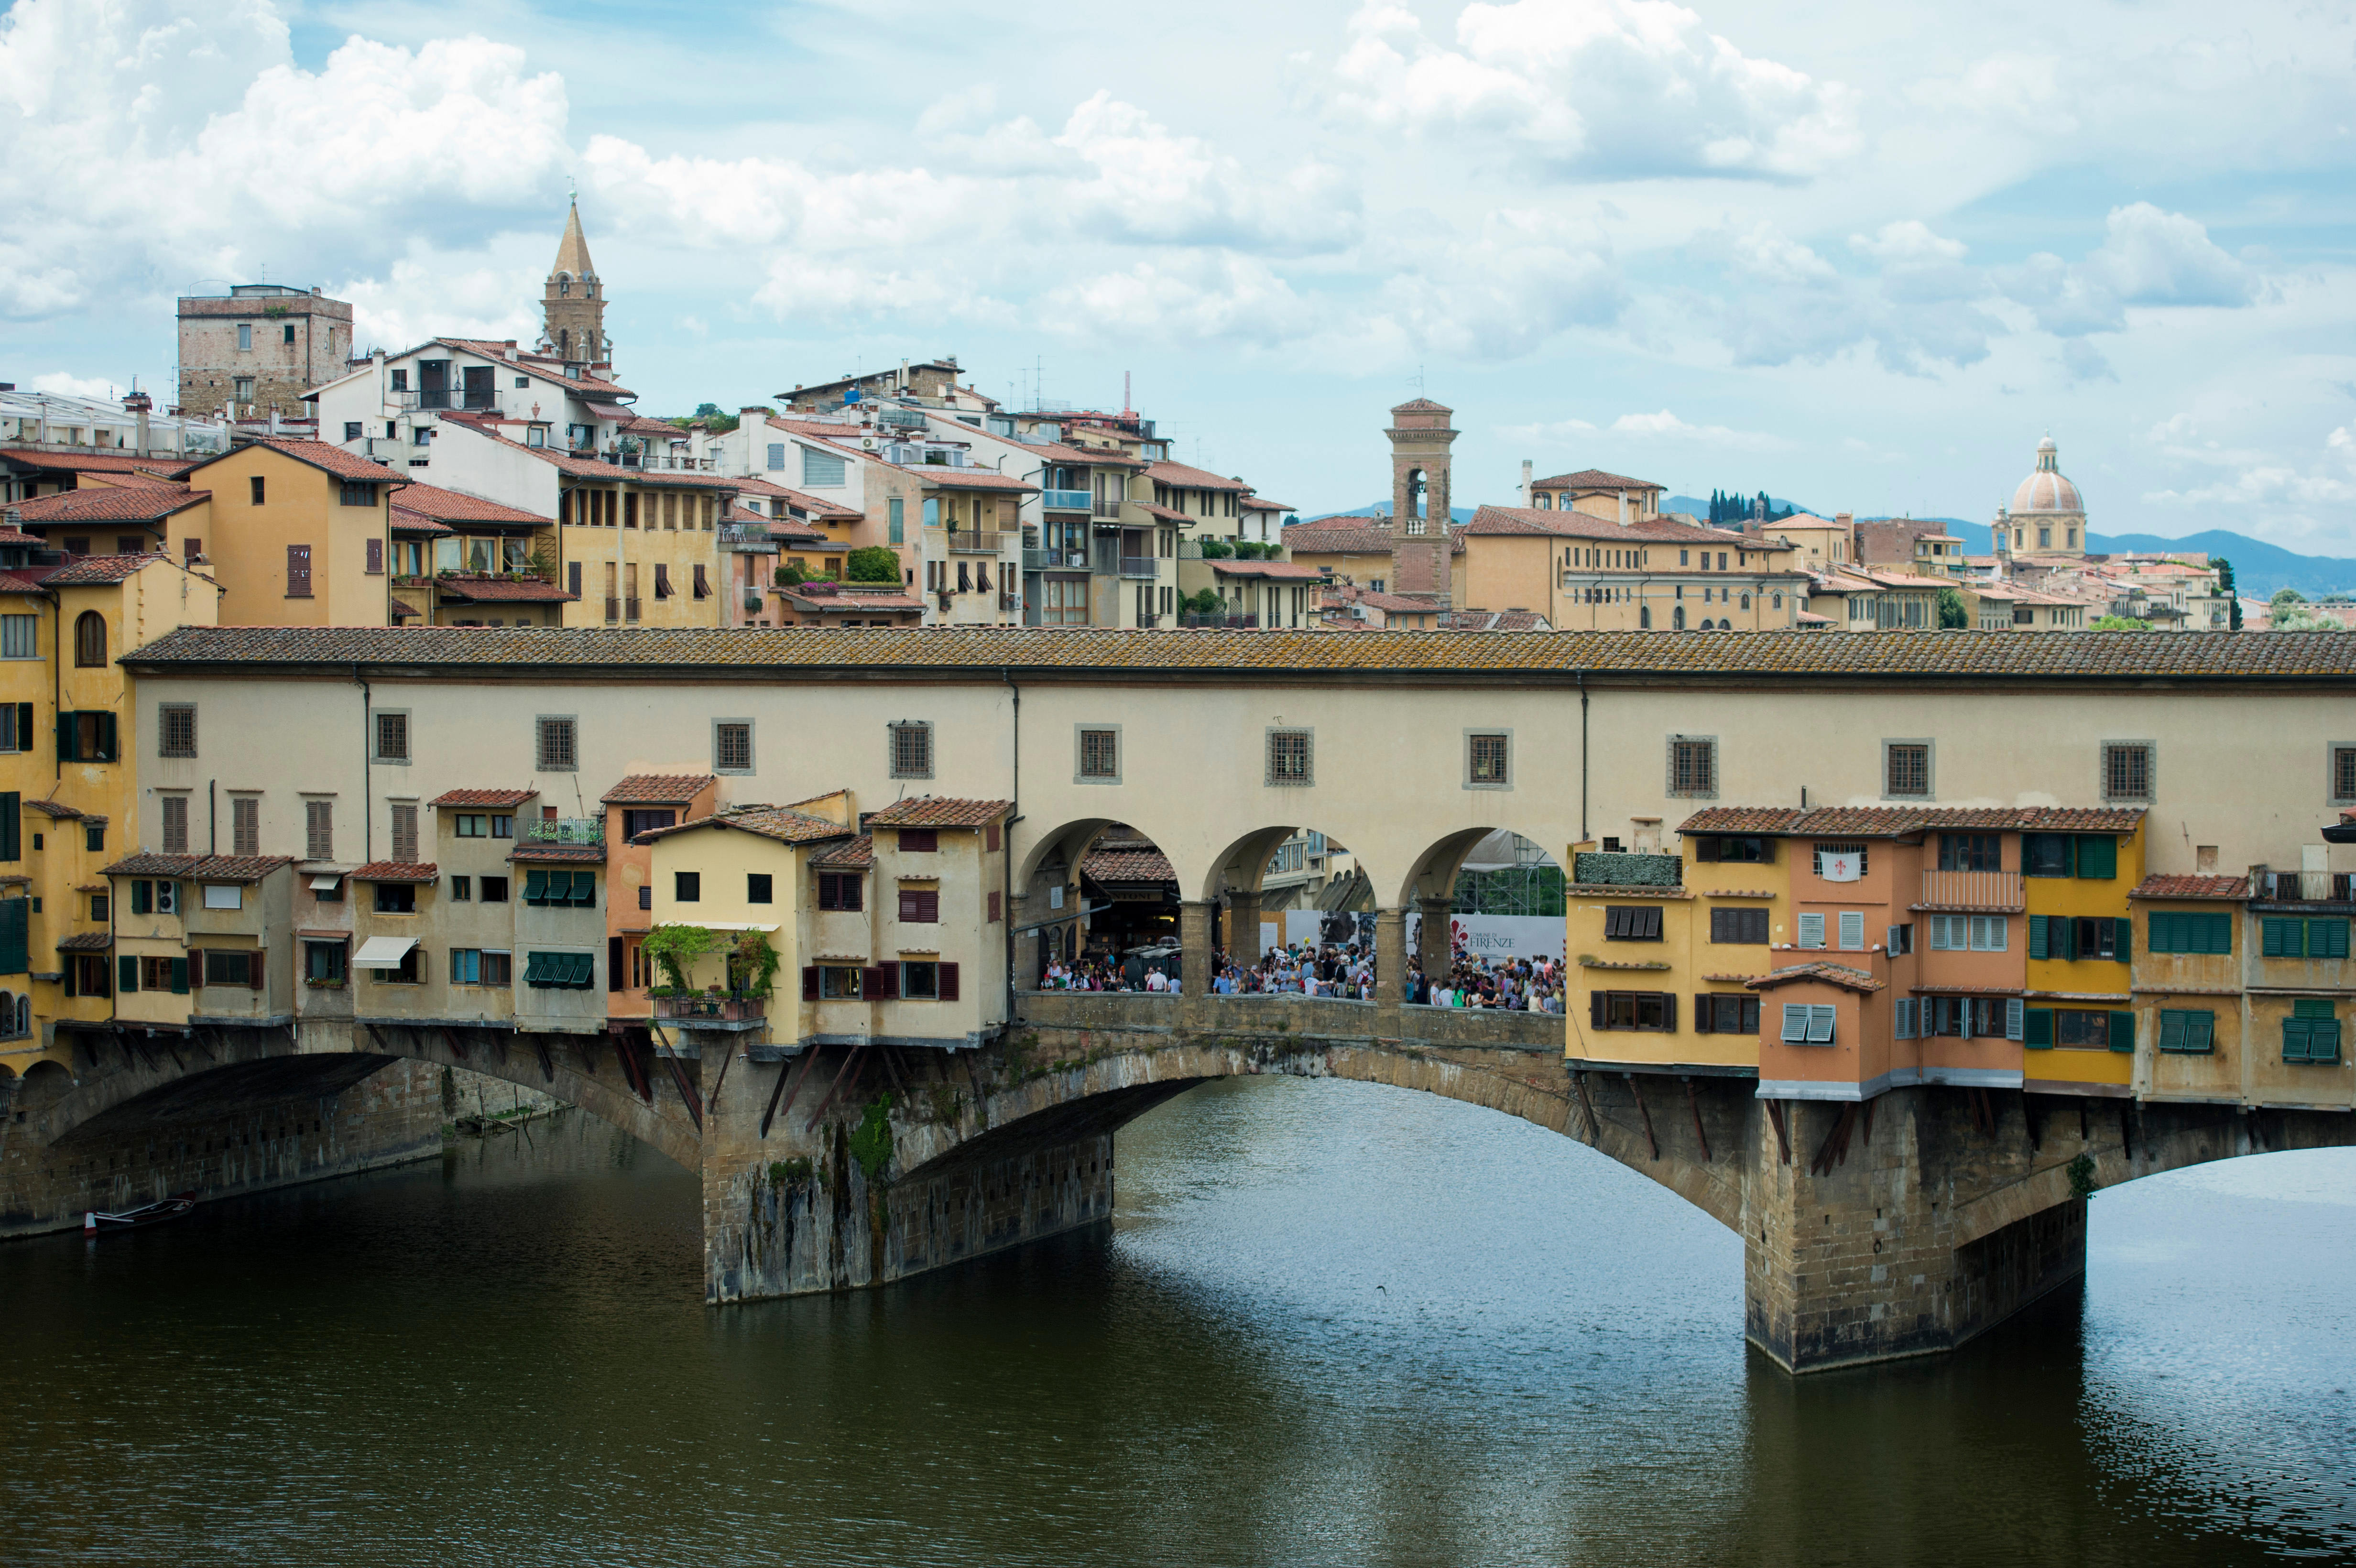 Most visitors crossing the Ponte Vecchio are unaware of the semi-secret Vasarian Corridor that runs over the bridge. Image by Michael Gottschalk / photothek.net / Getty Images 